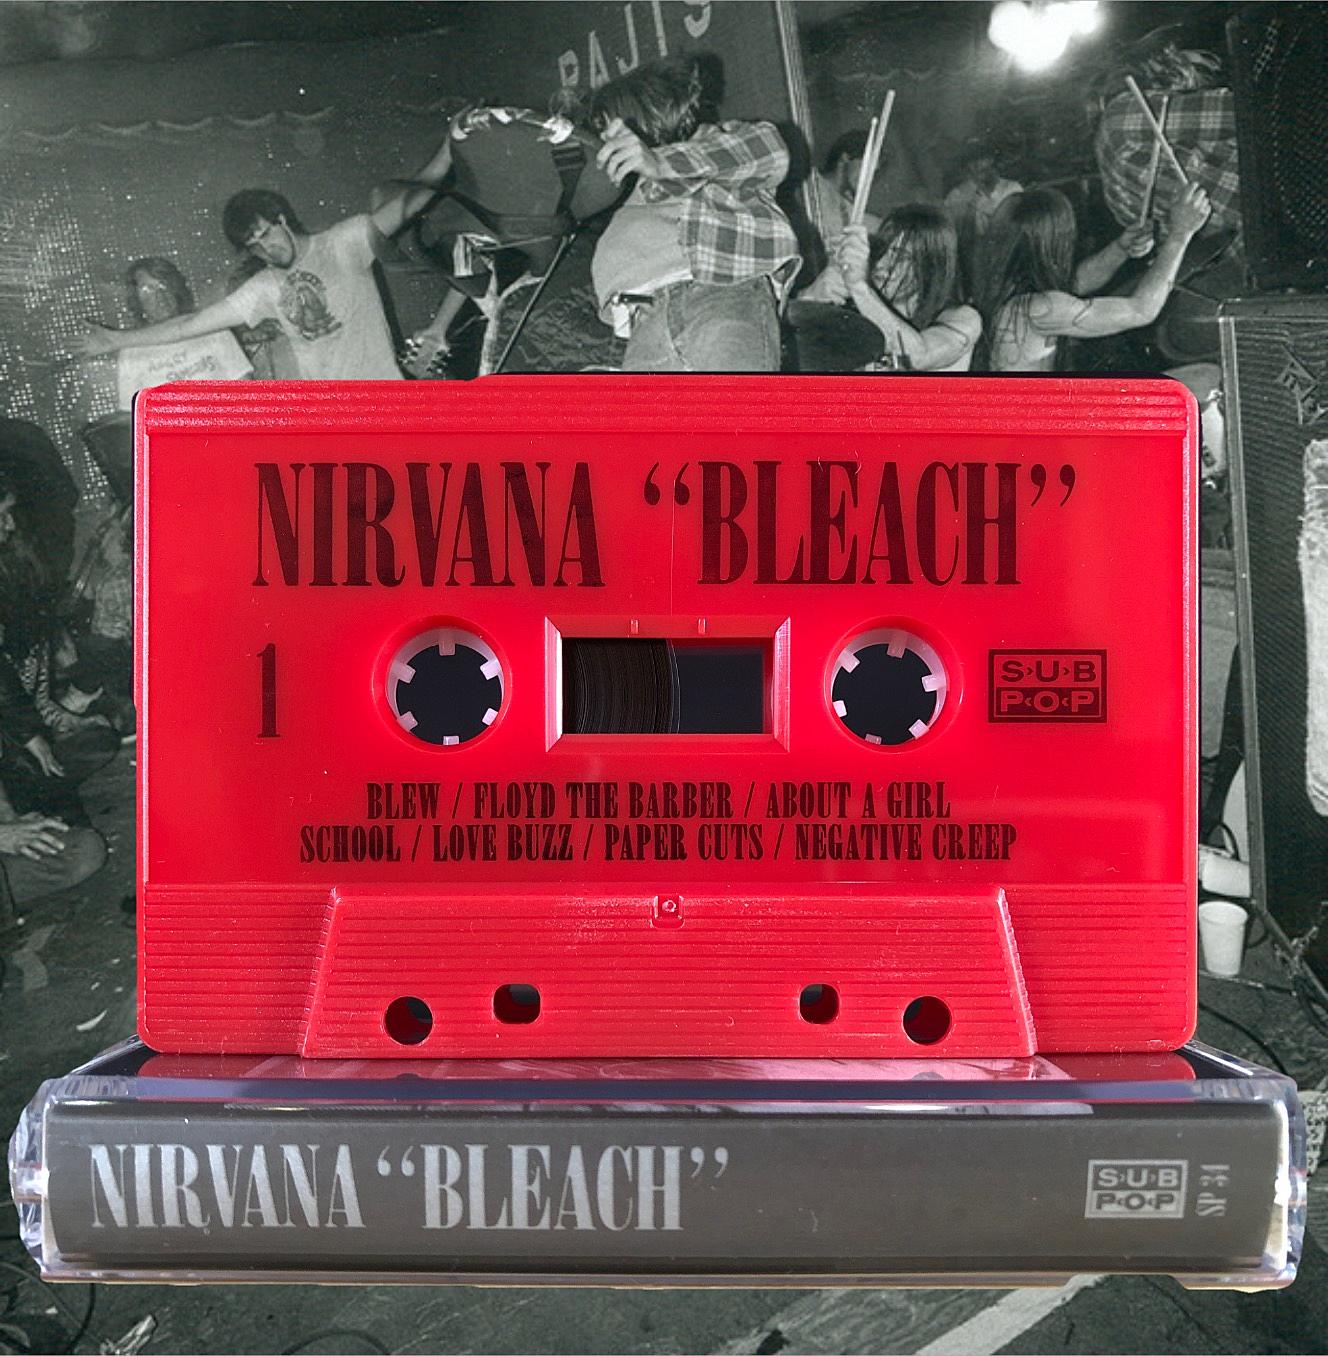 Nirvana love buzz. Кассета Nirvana subpop. Nirvana 1989 Bleach. Нирвана Блич. Nirvana Bleach обложка.